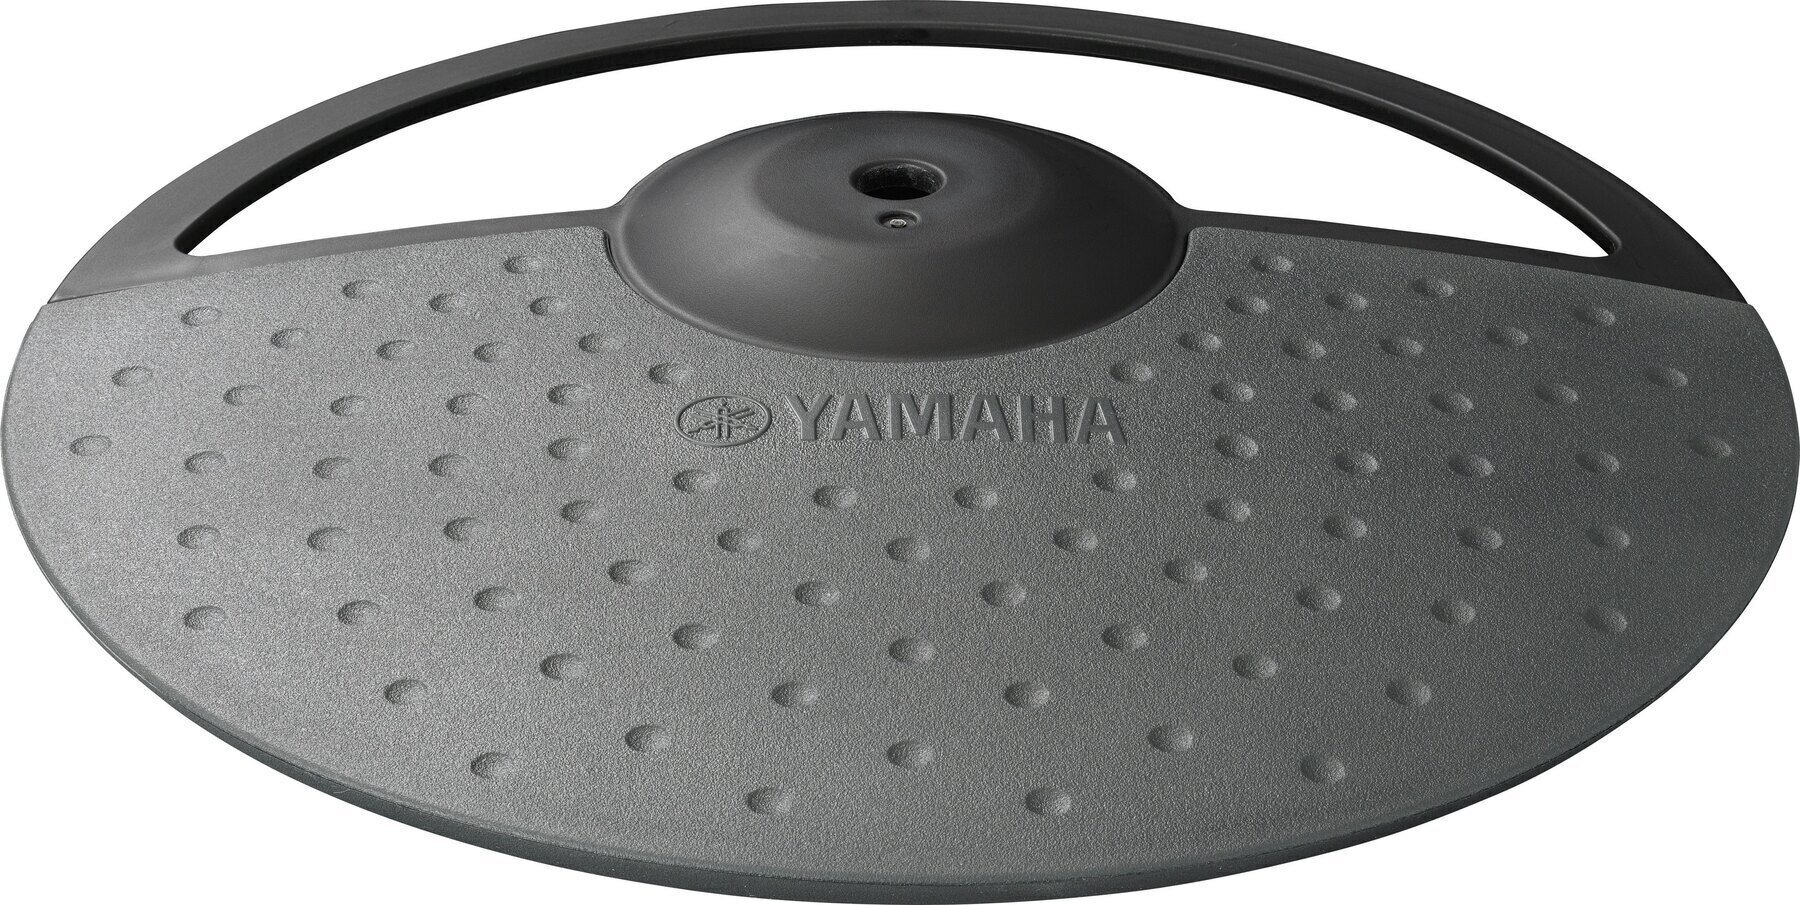 E-Drum Pad Yamaha PCY 90 Cymbal pad